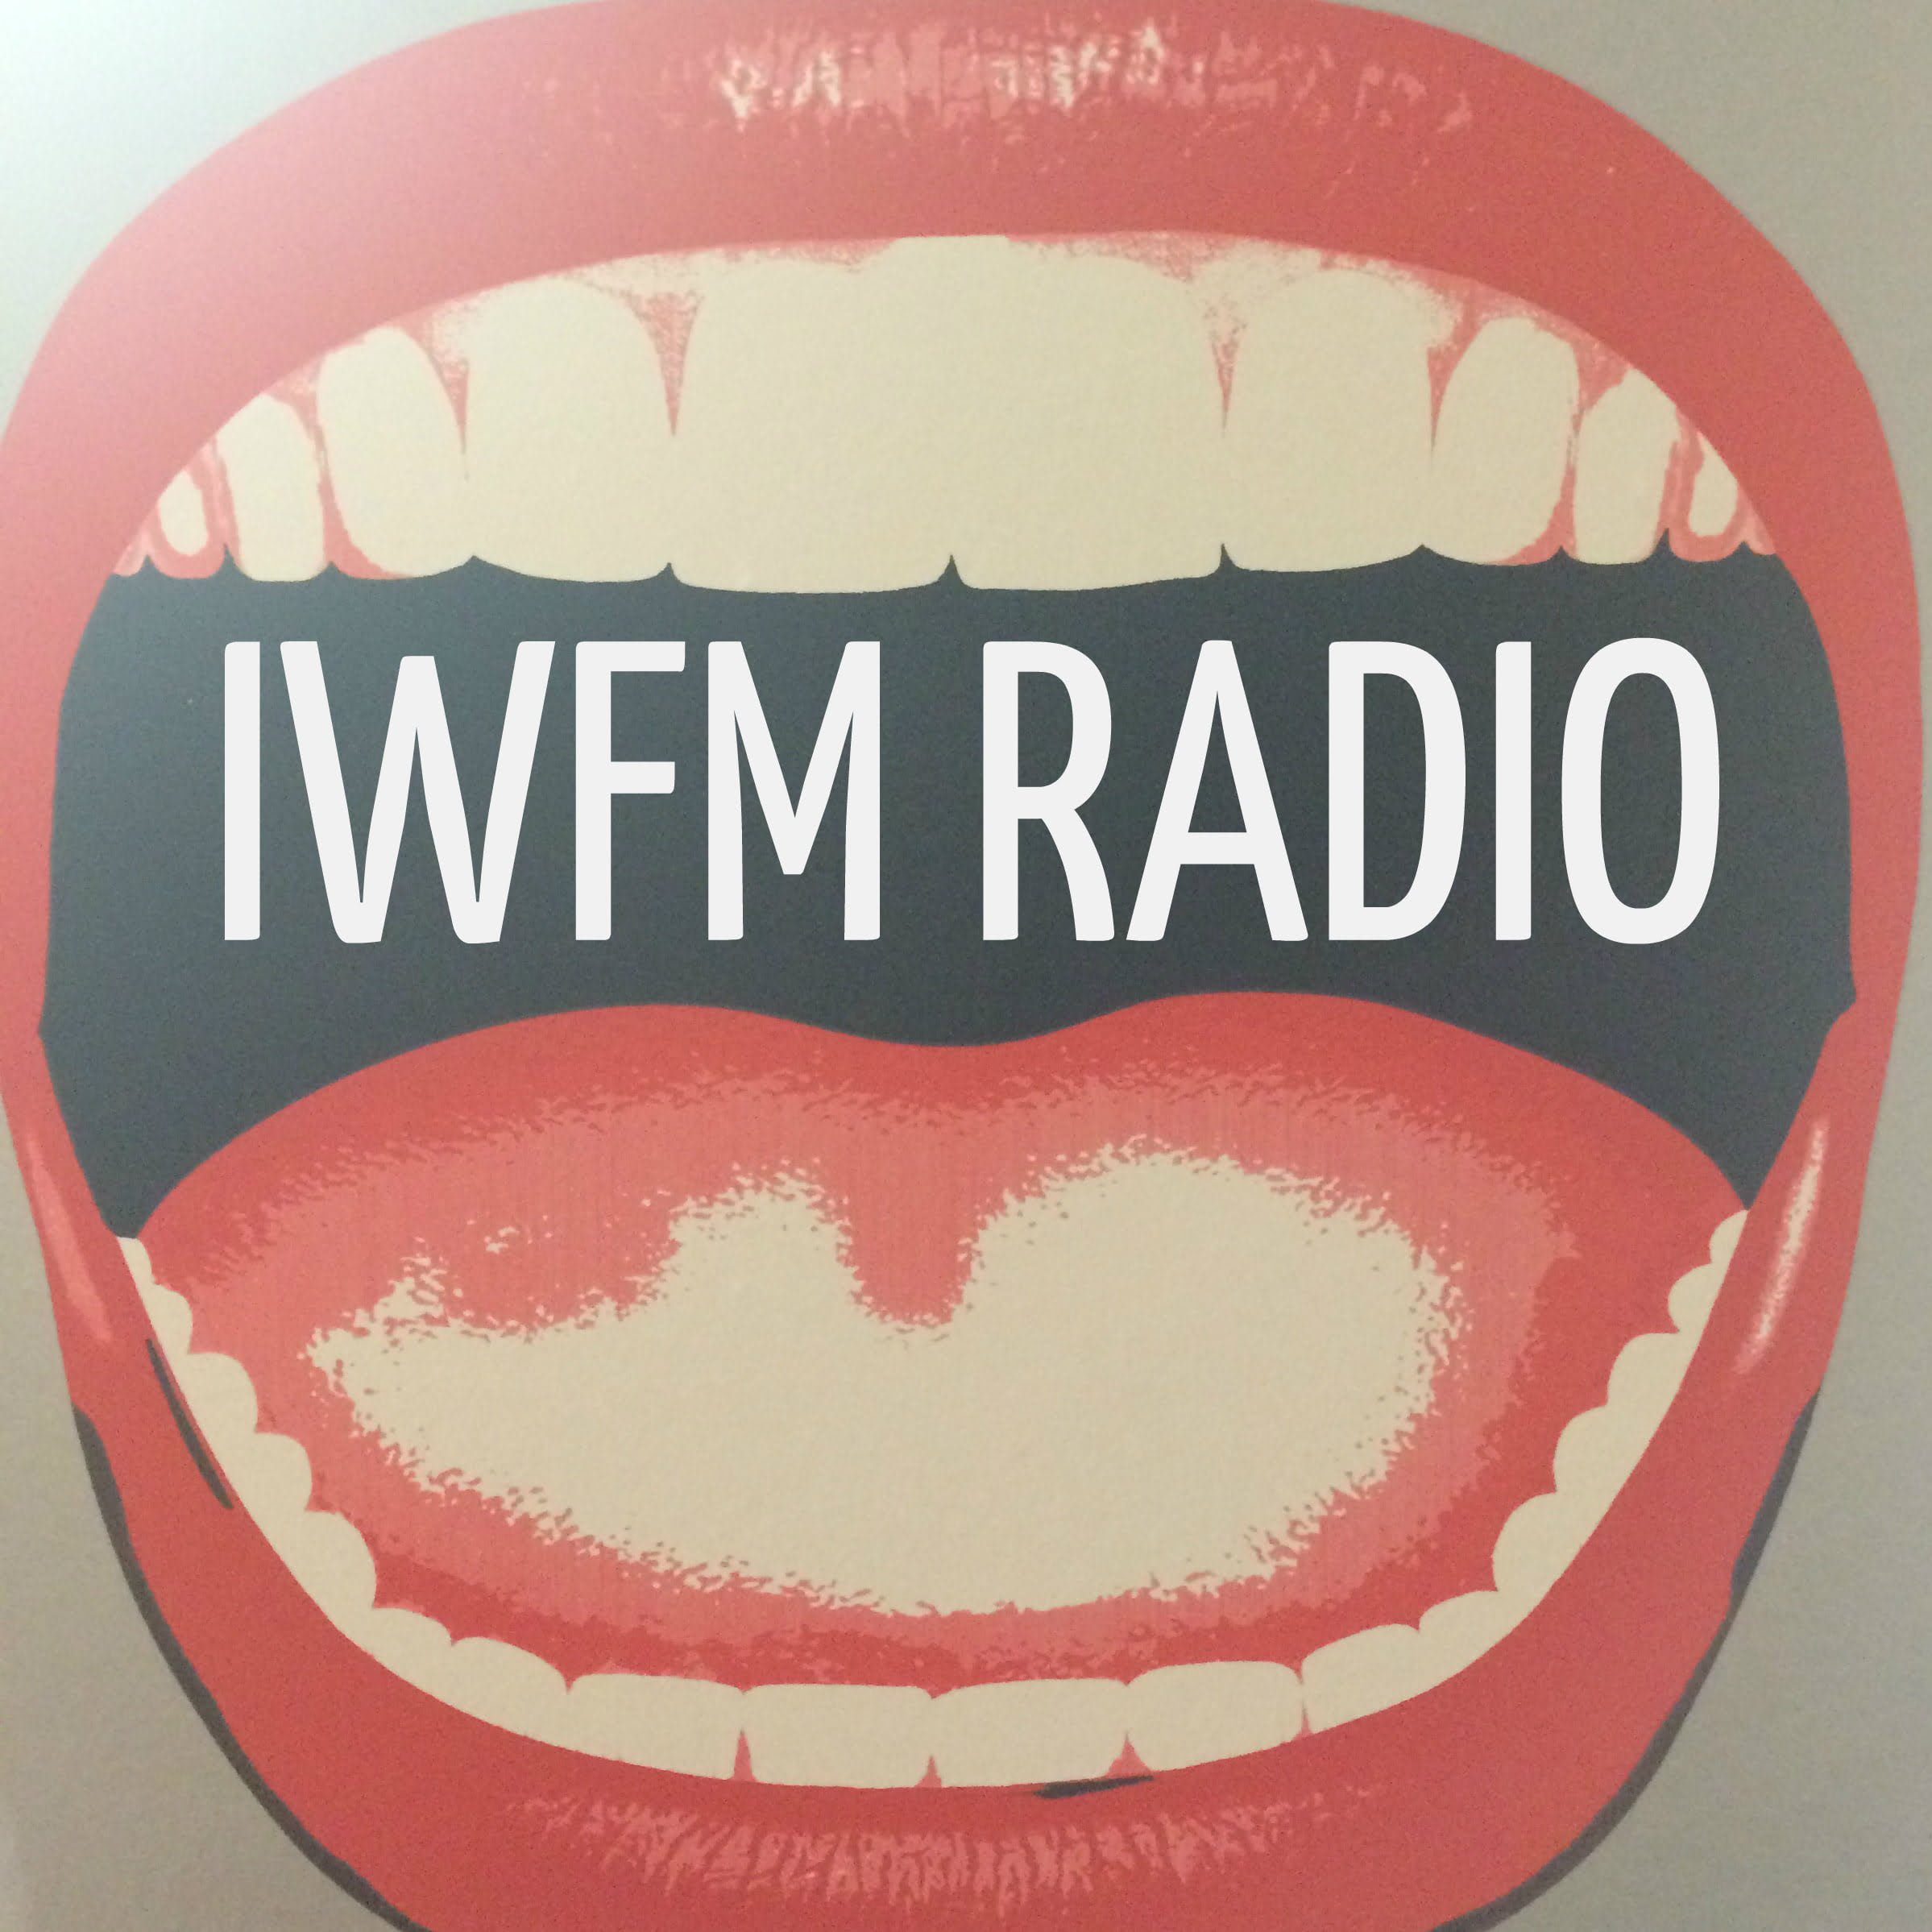 IWFM RADIO LAUNCH 